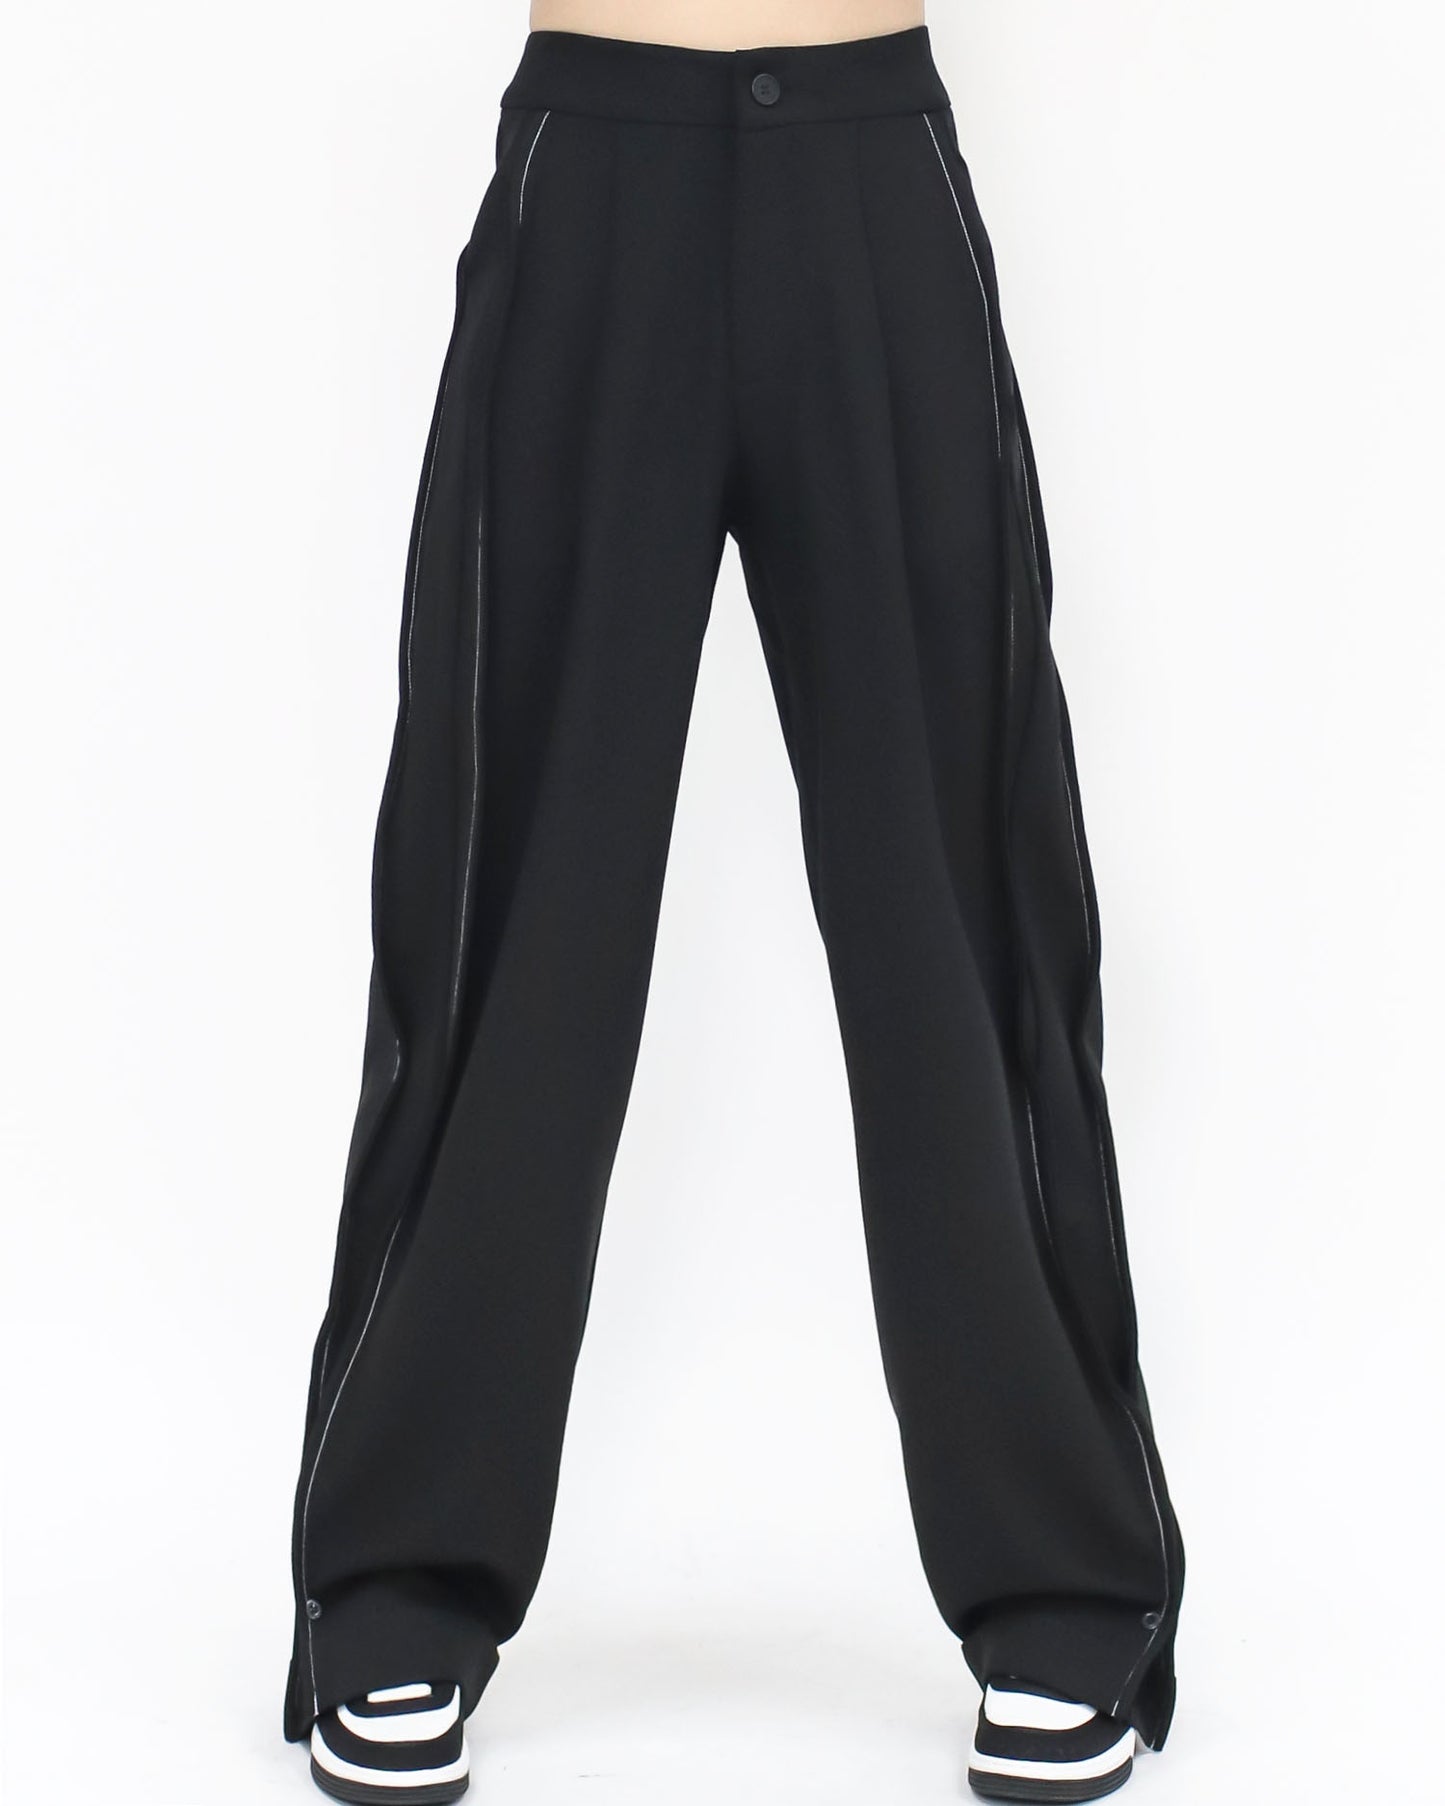 black w/ ivory trim button side straight pants - S